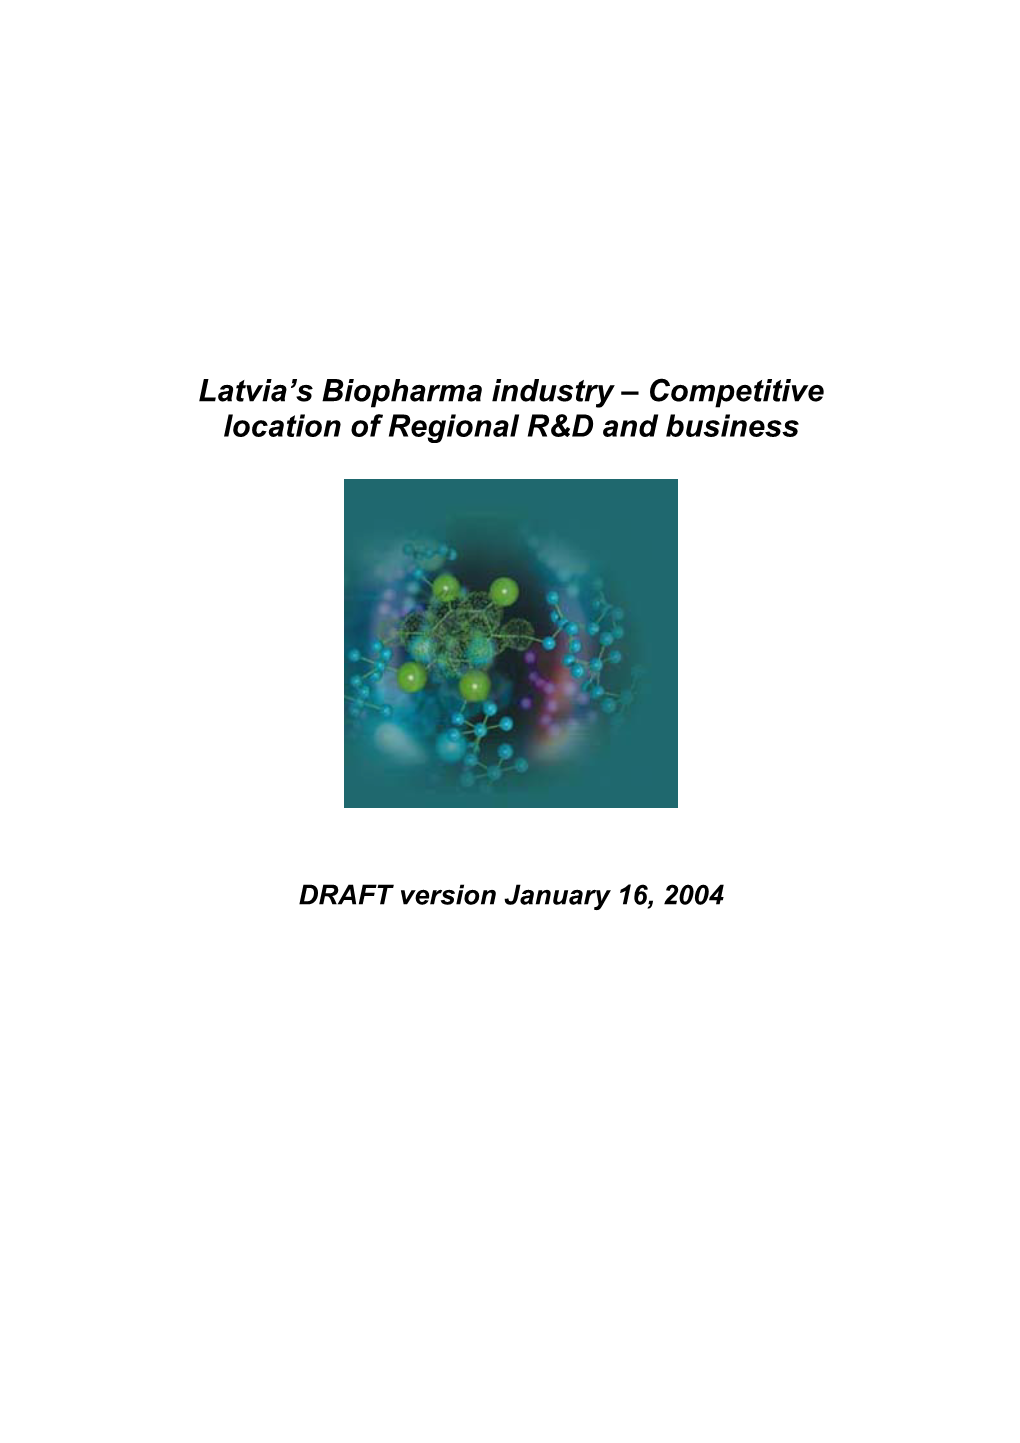 Latvia's Biopharma Industry – Competitive Location of Regional